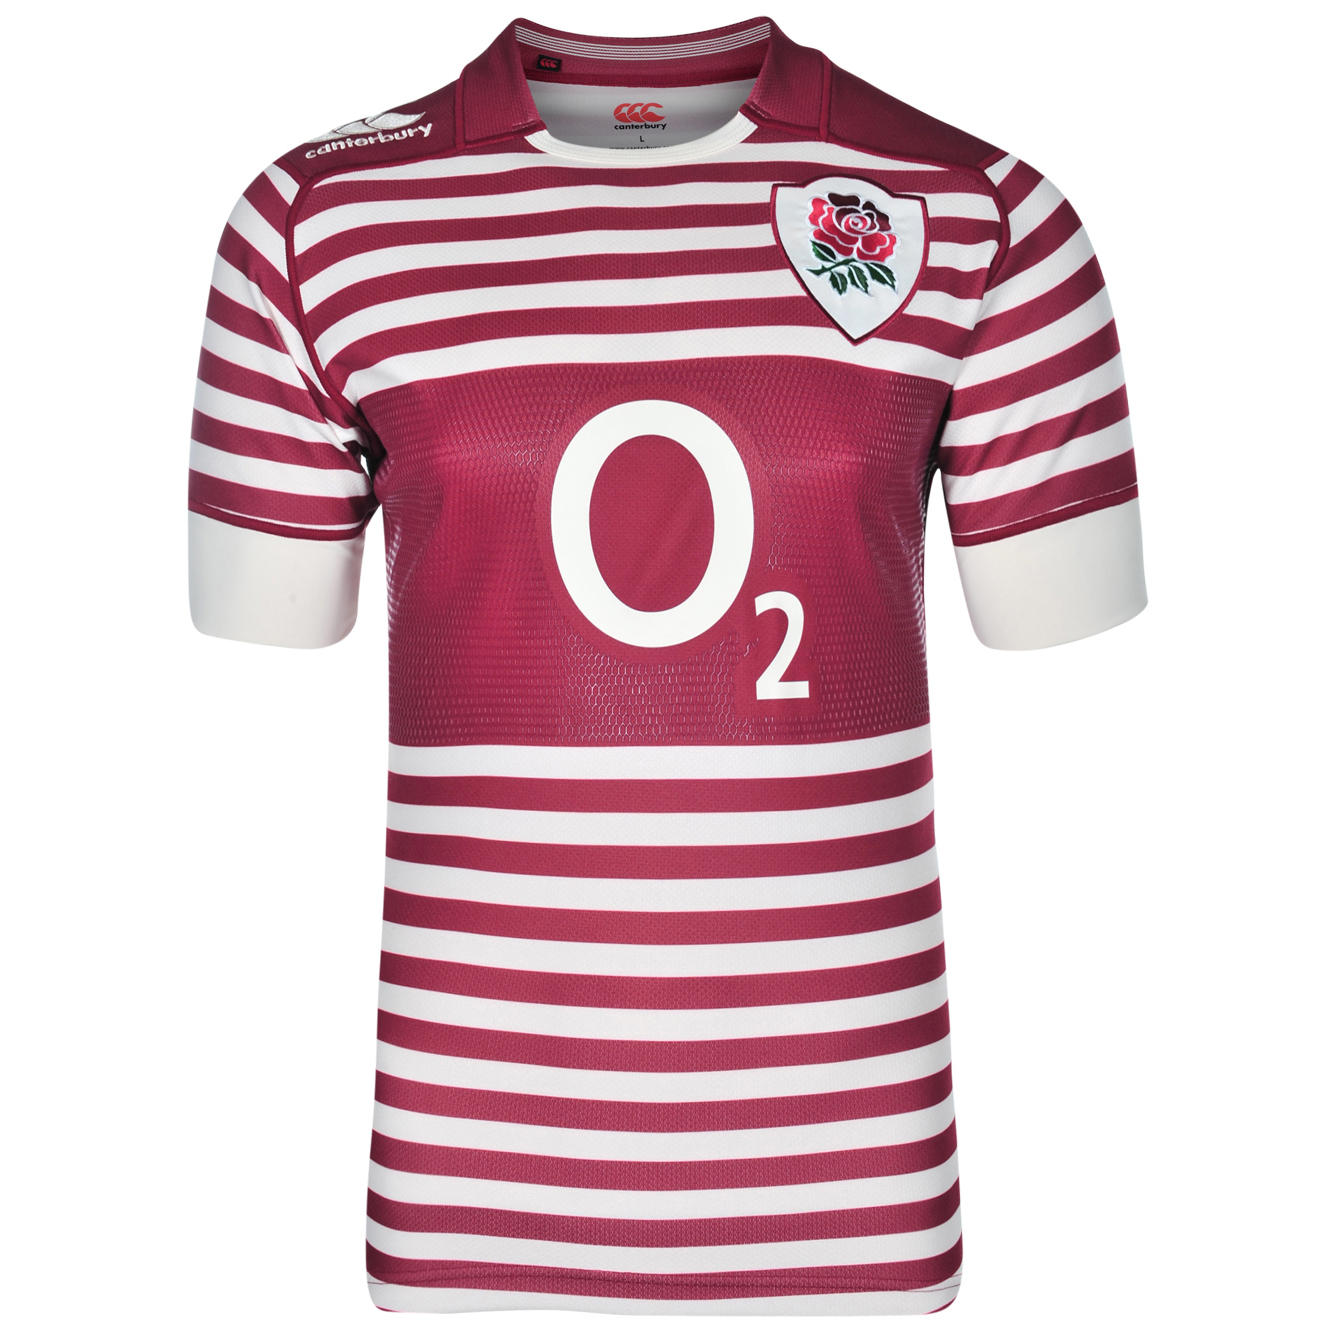 England Alternate Rugby Test Shirt 2013/14